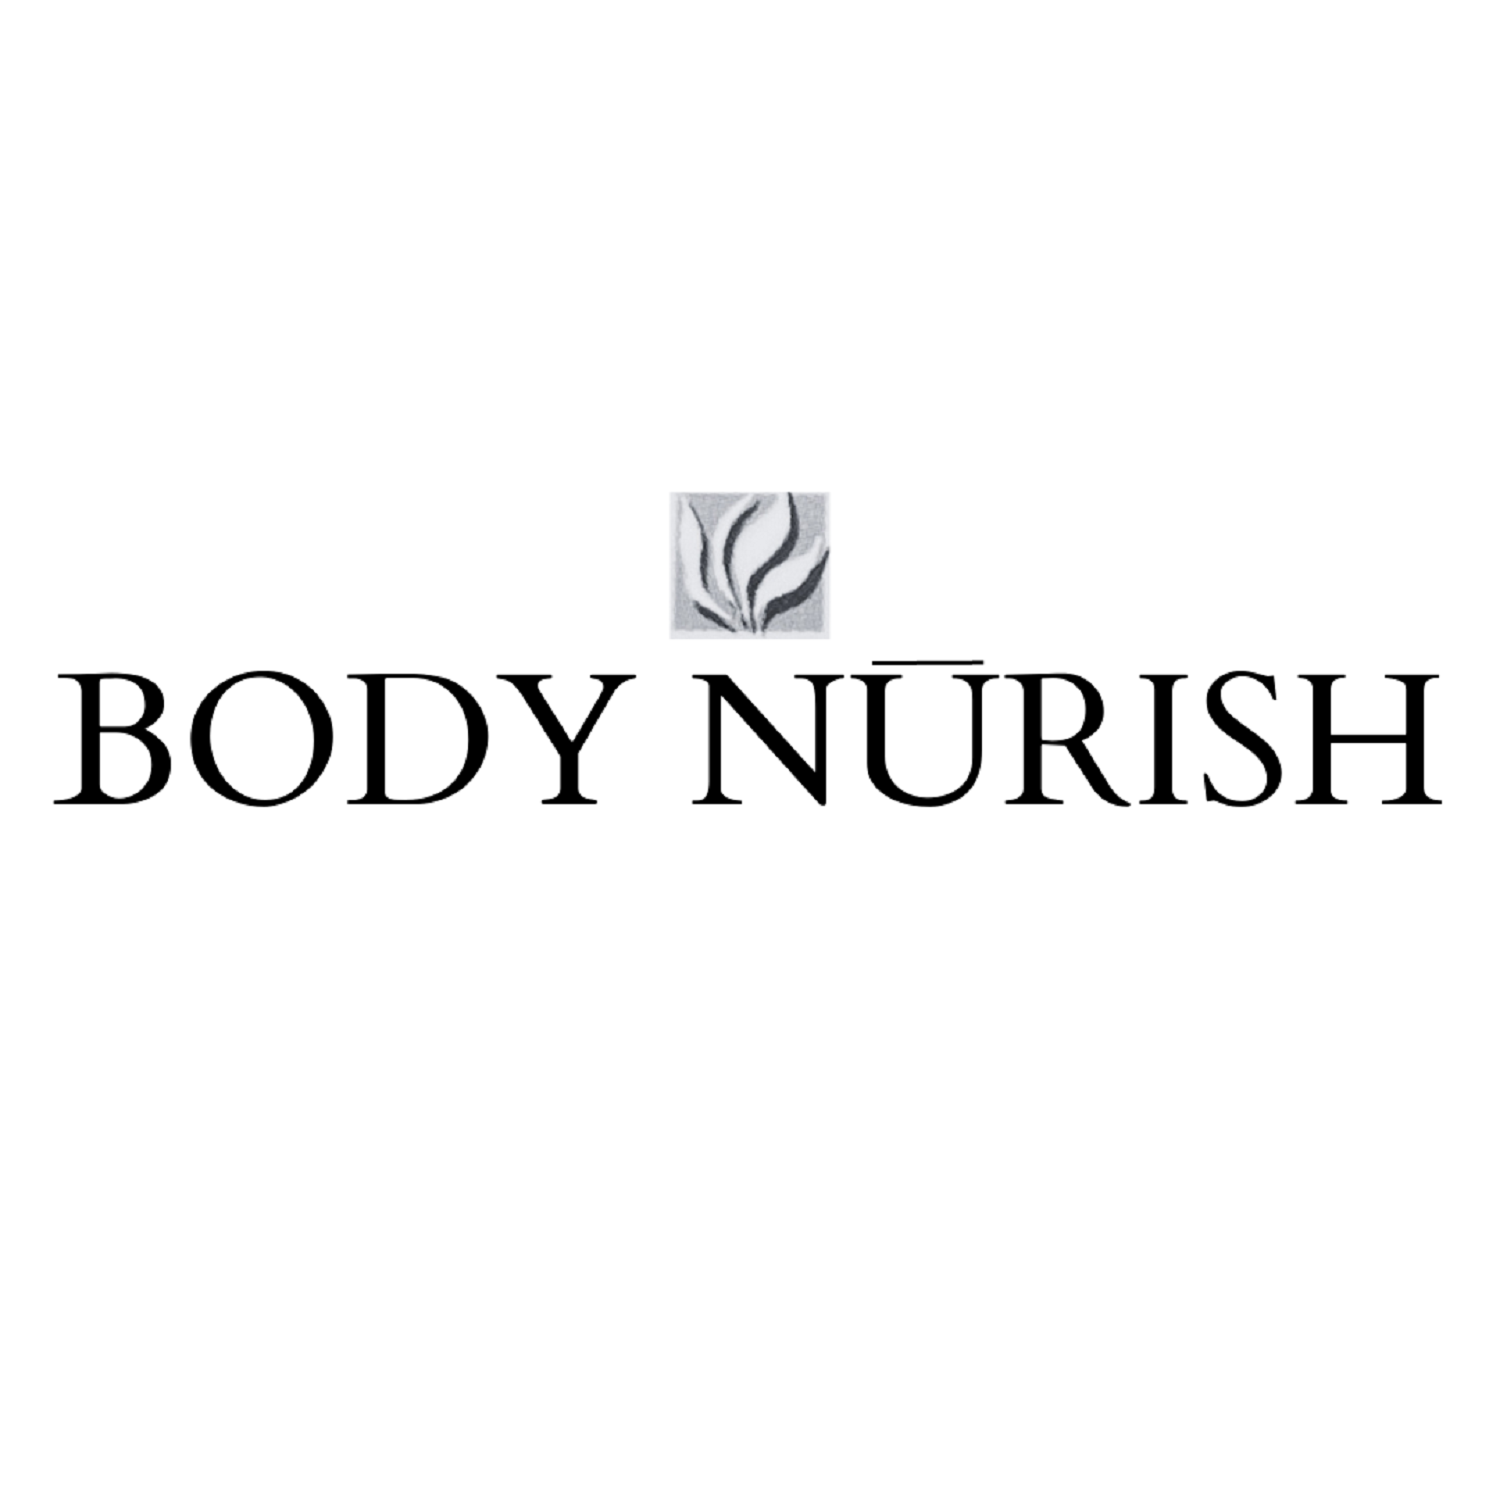 Body Nurish by Peak Scents